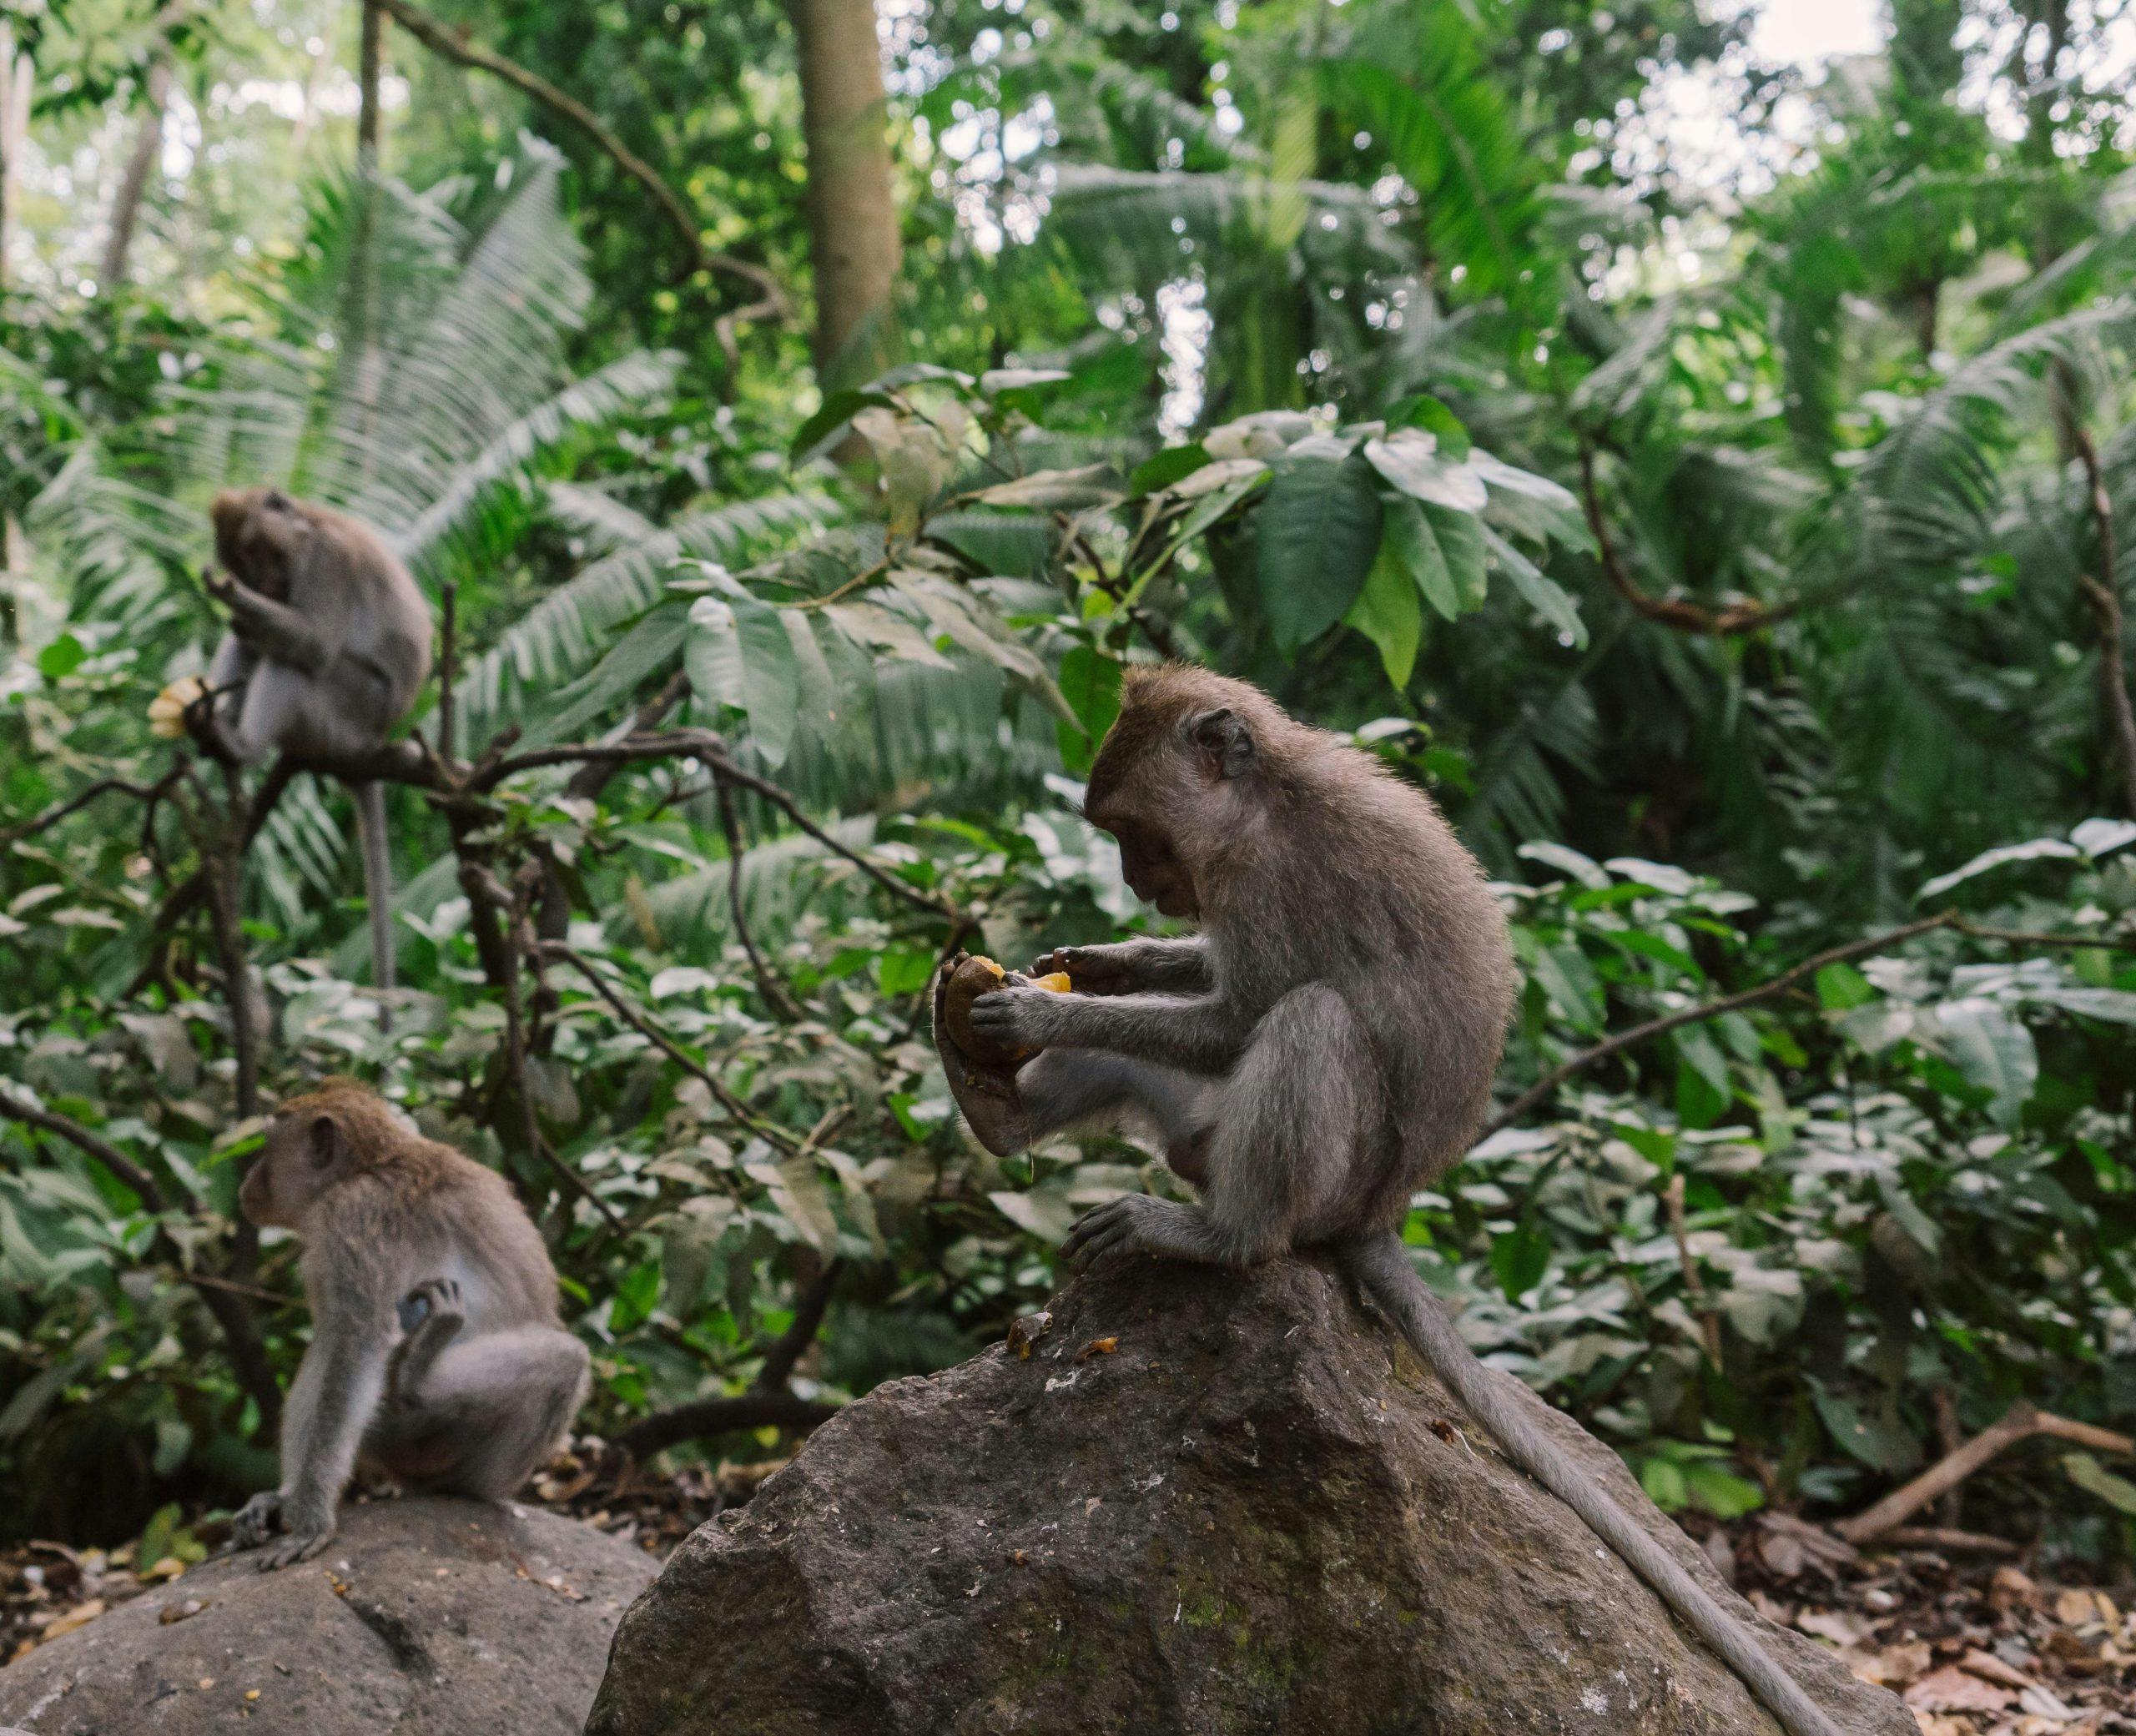 Three Rhesus Macaque monkeys sitting on rocks in a tropical forest